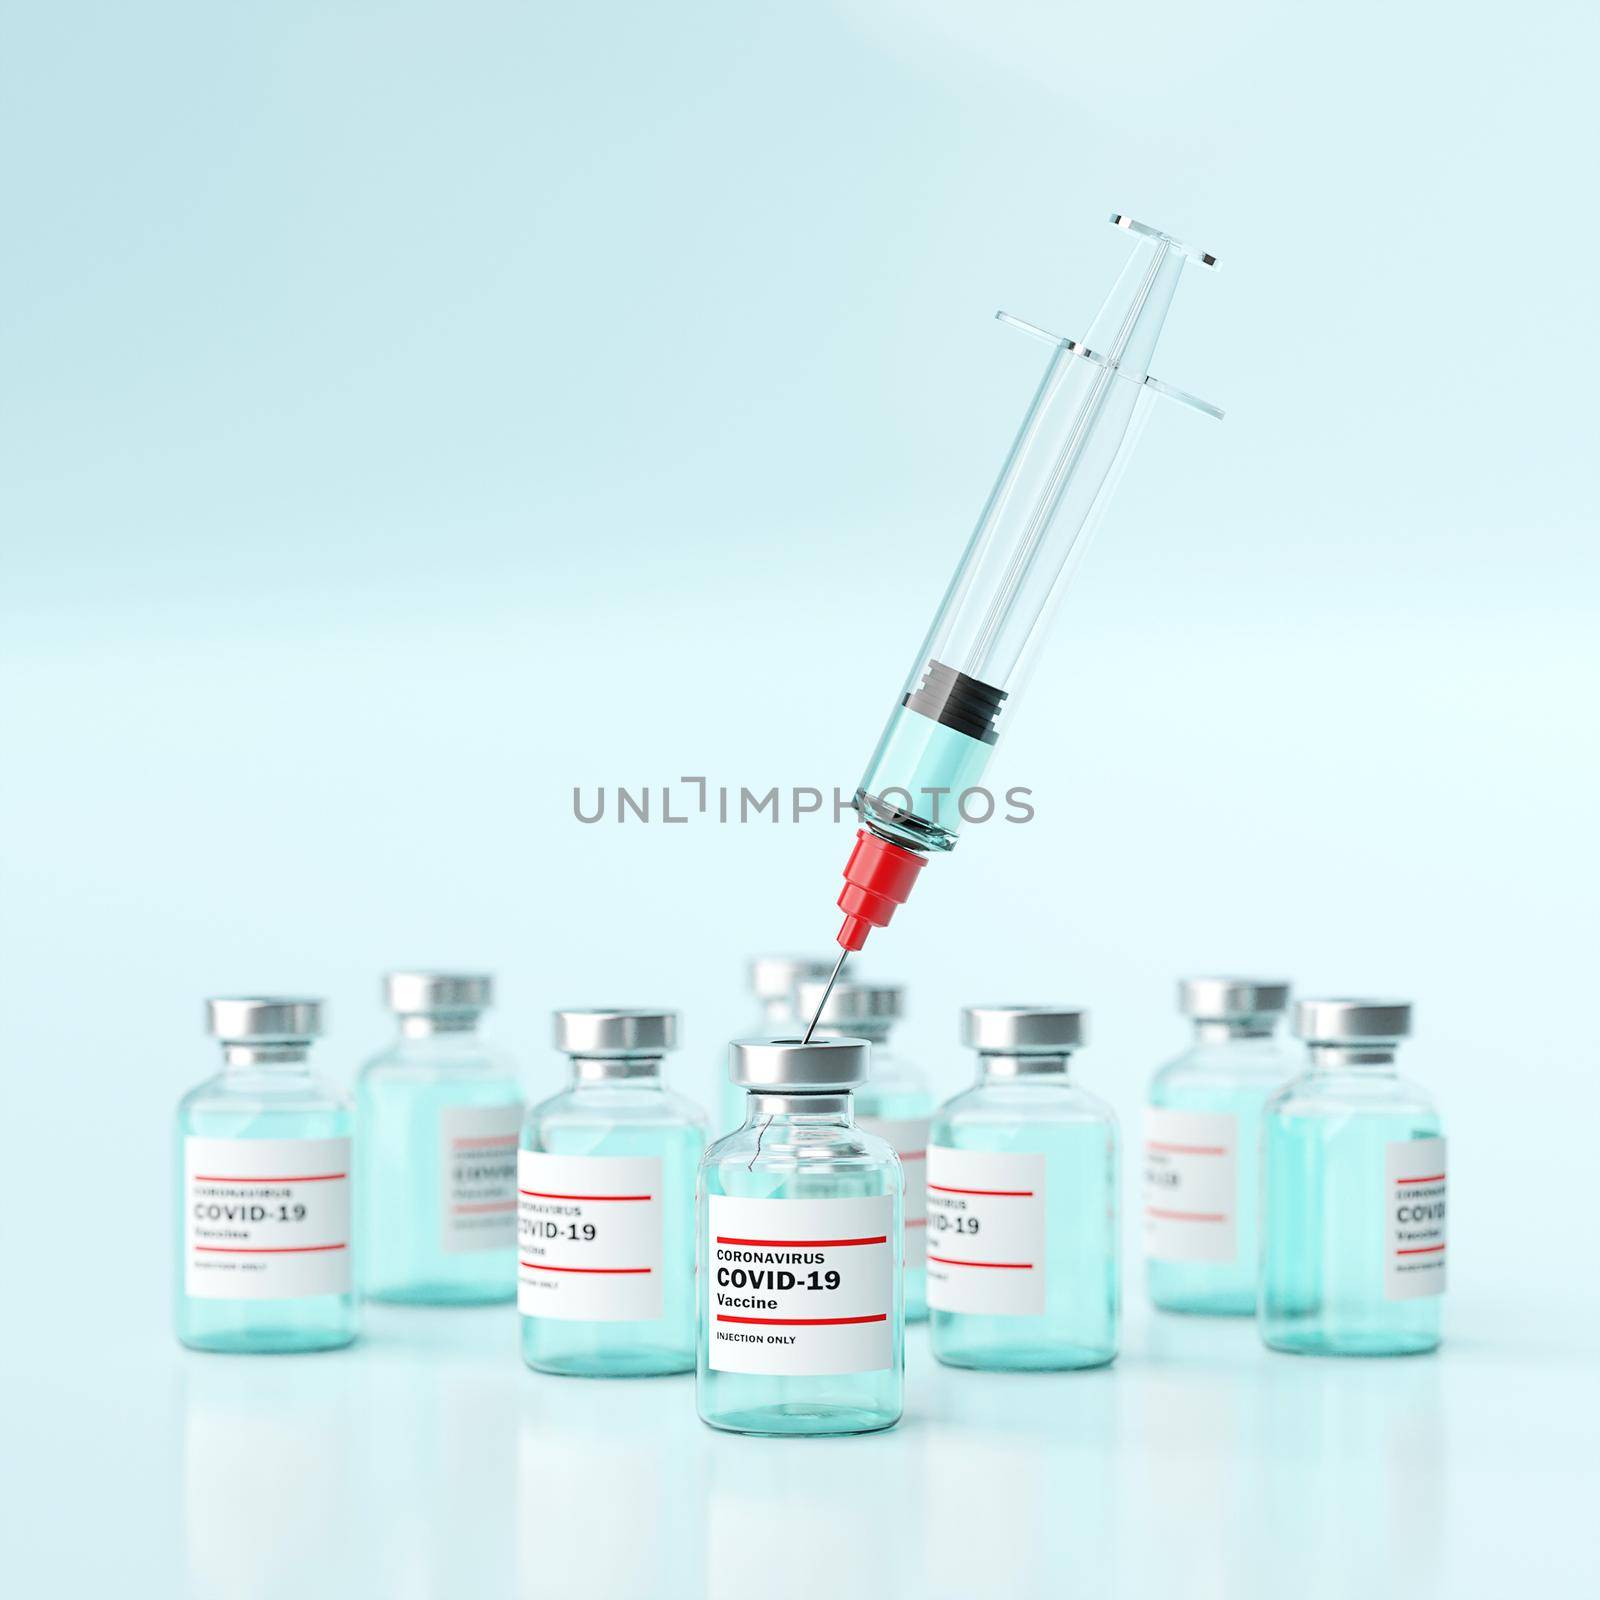 Medical concept, A syringe  and Bottle vial of 2019-ncov Covid-19 Corona Virus, 3d illustration